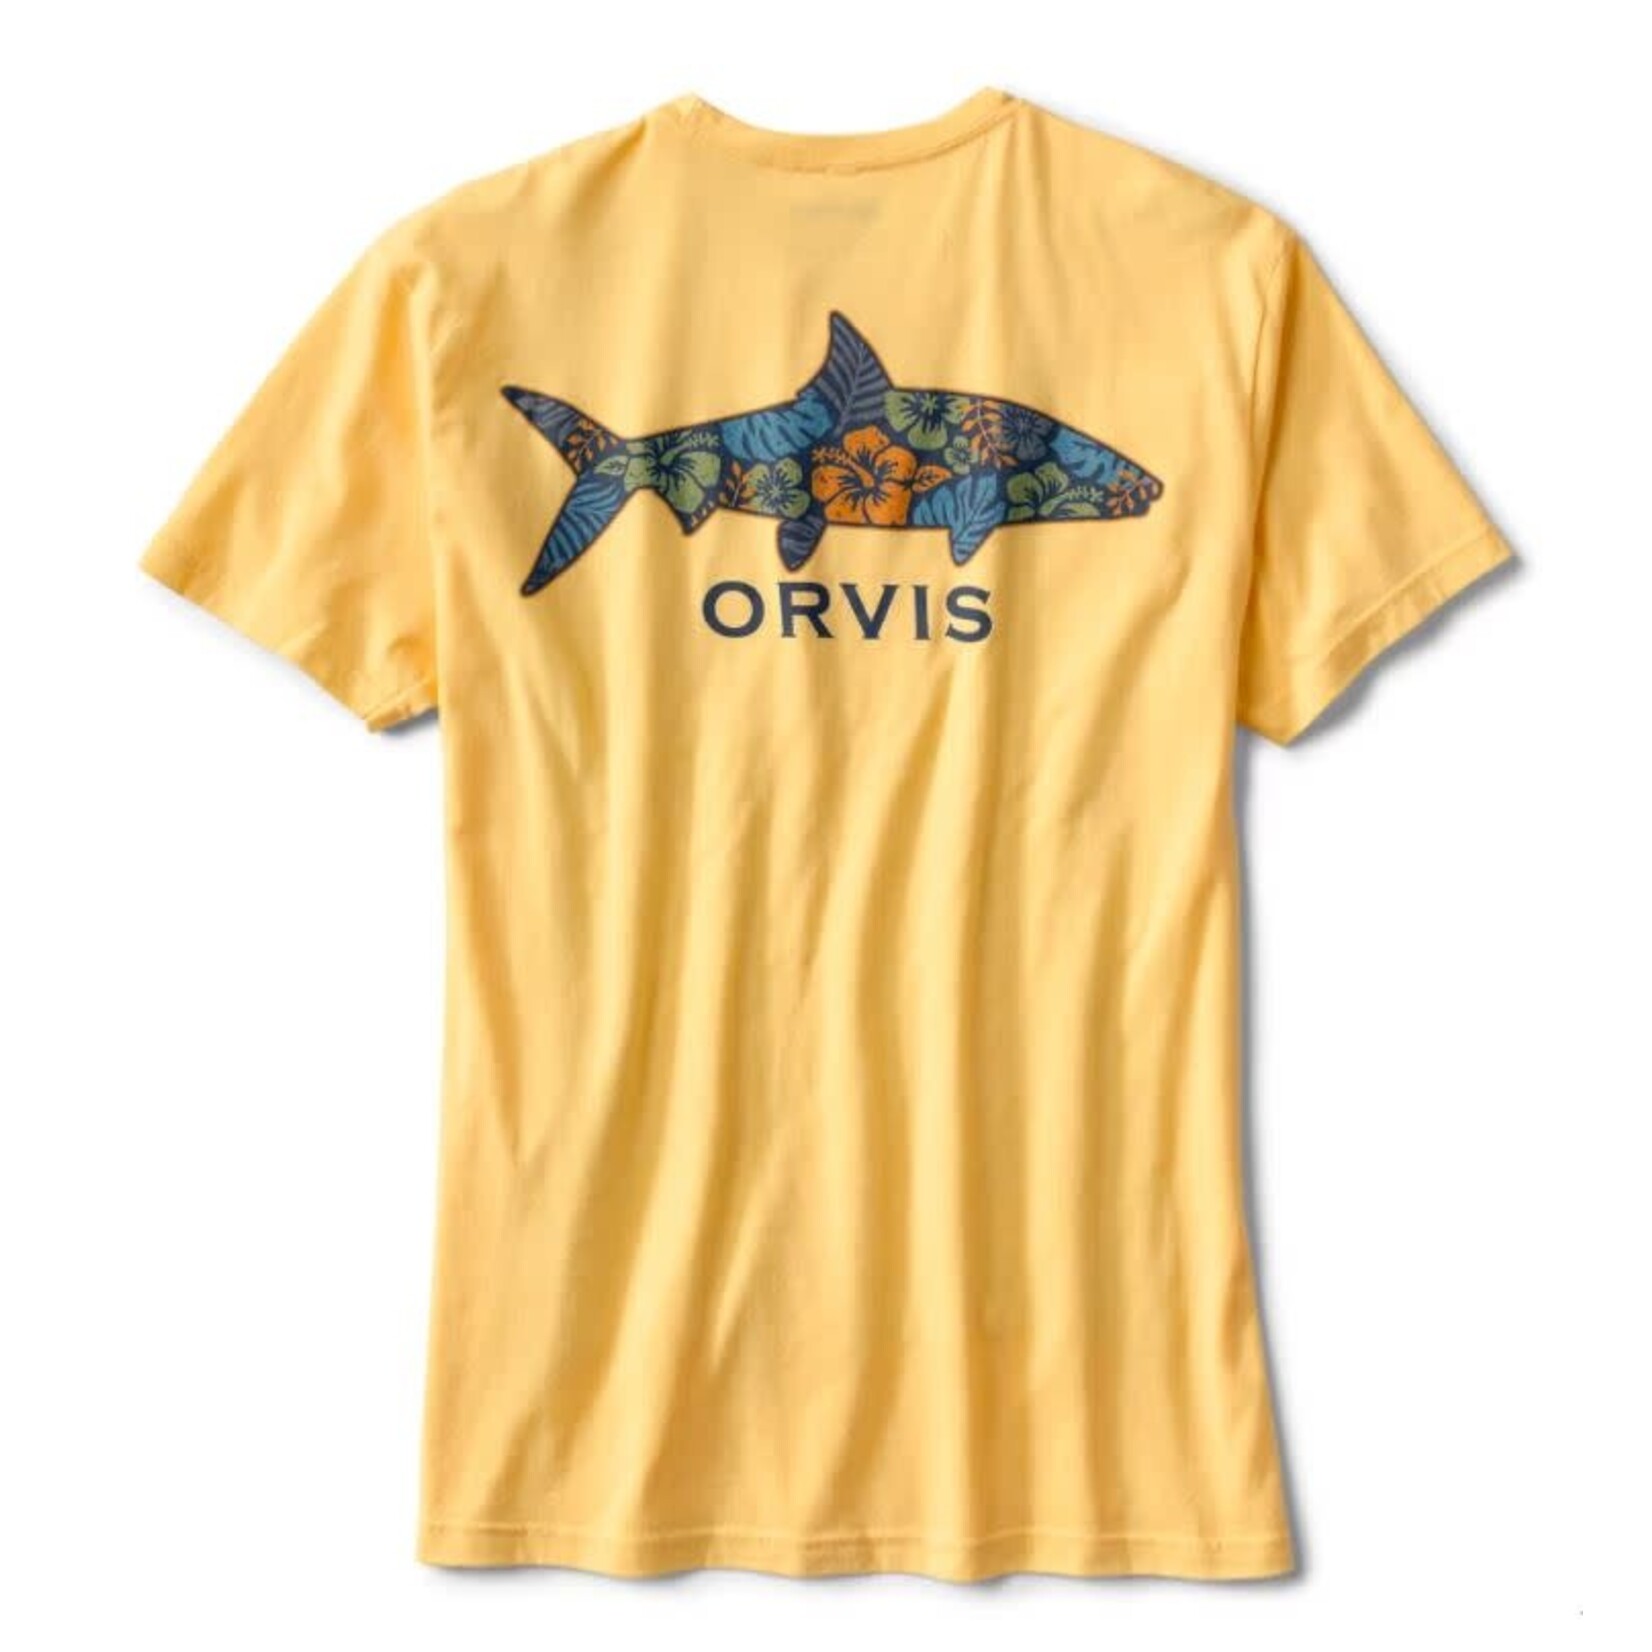 ORVIS Orvis Tropical Bonefish Tee